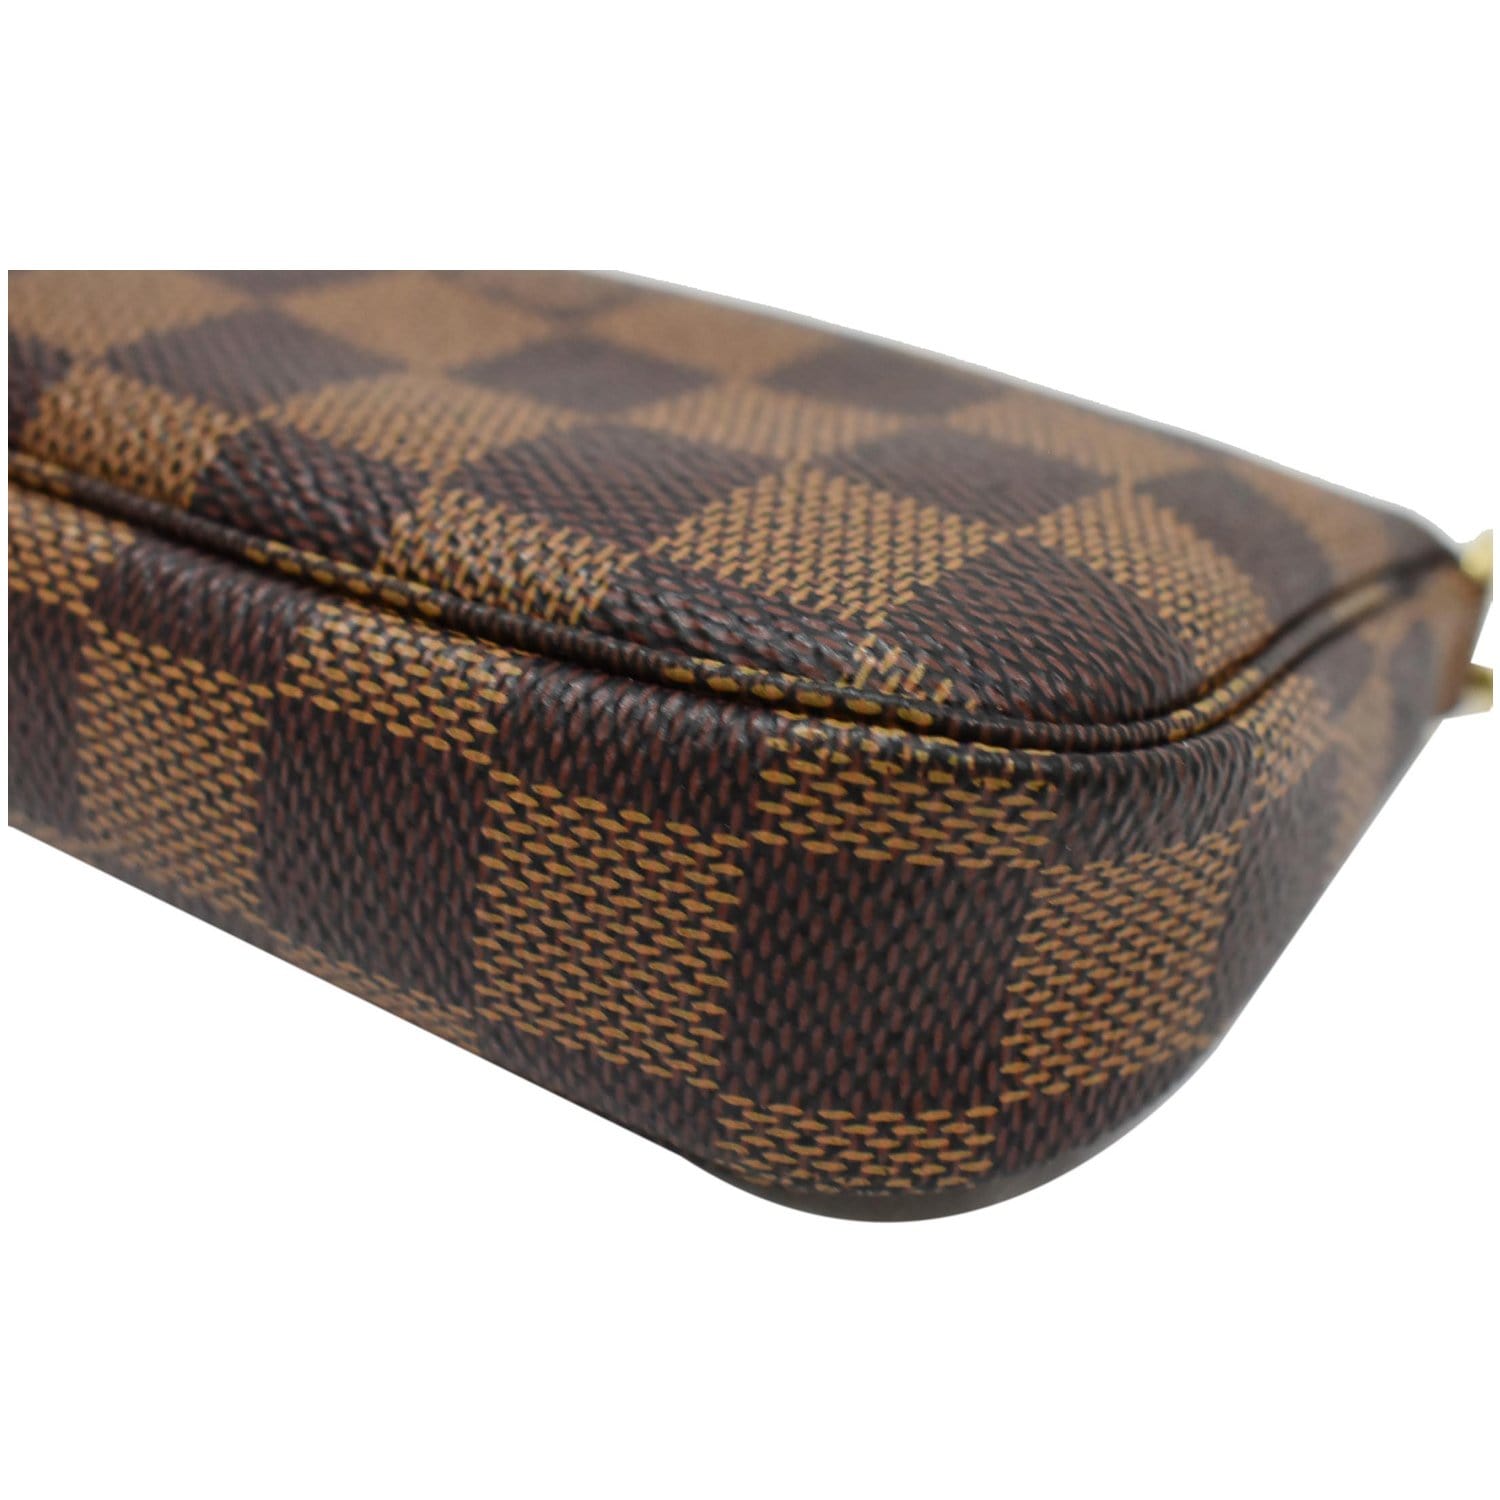 Pochette accessoire mini bag Louis Vuitton Brown in Plastic - 35088027